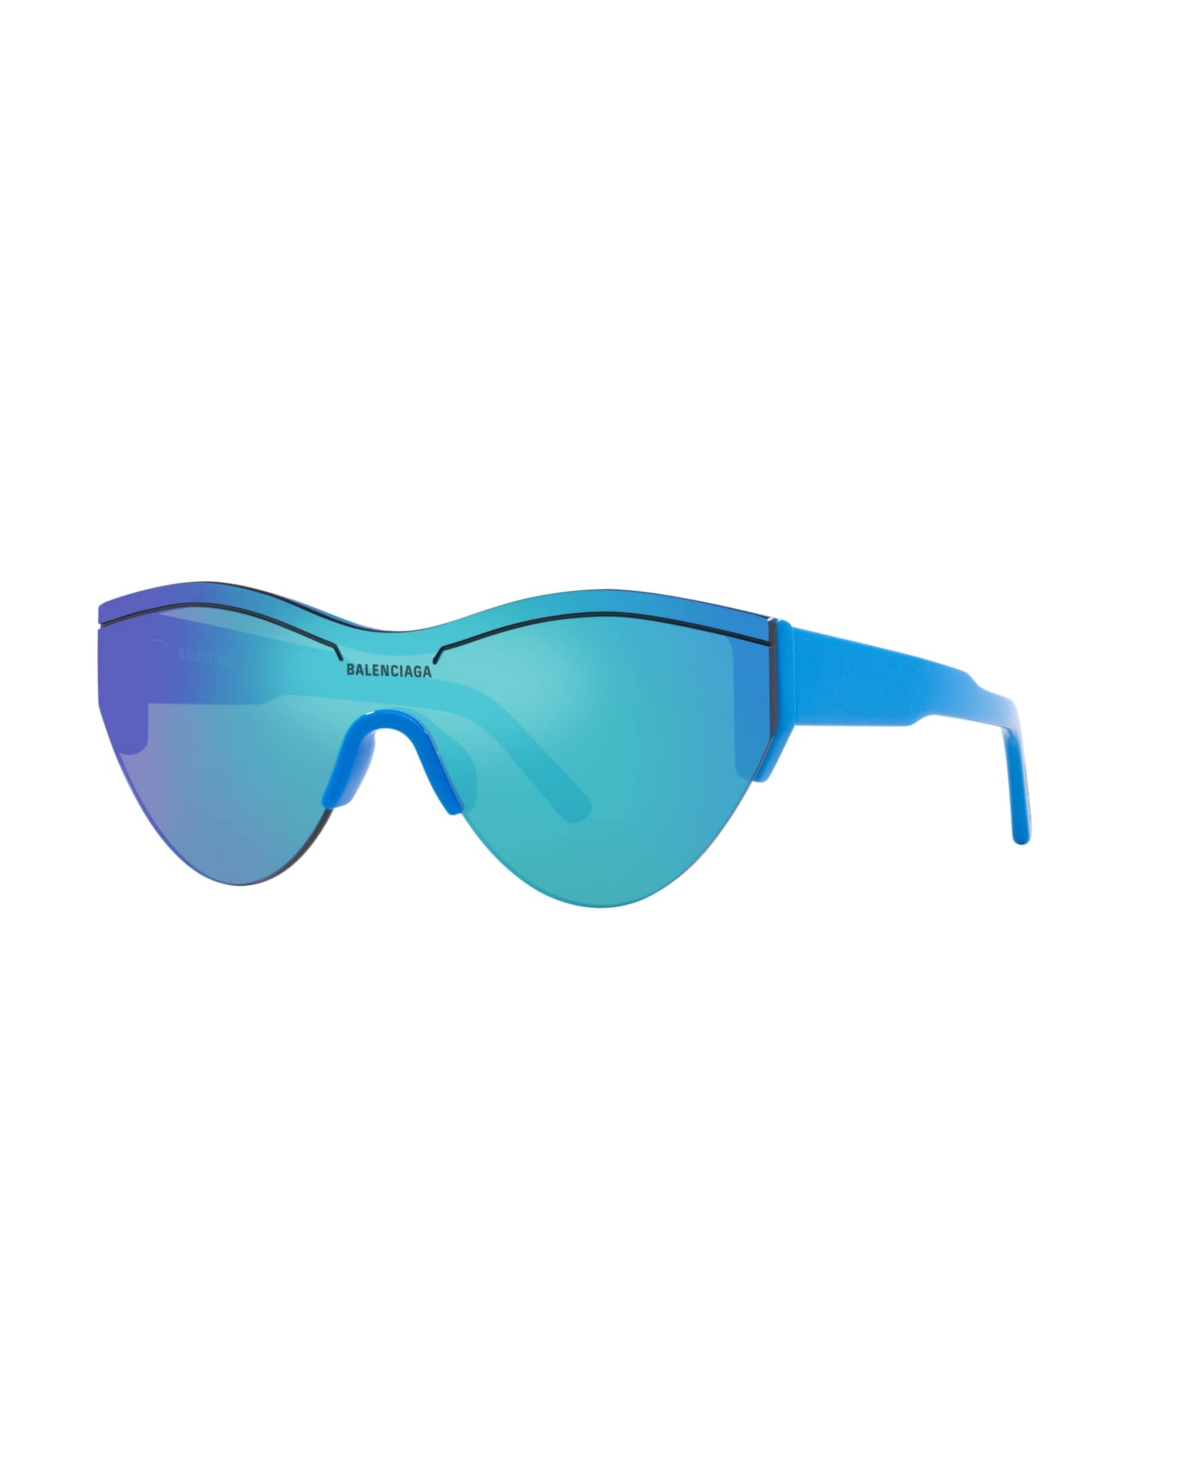 Balenciaga Unisex Sunglasses, Bb0004s In Blue Light